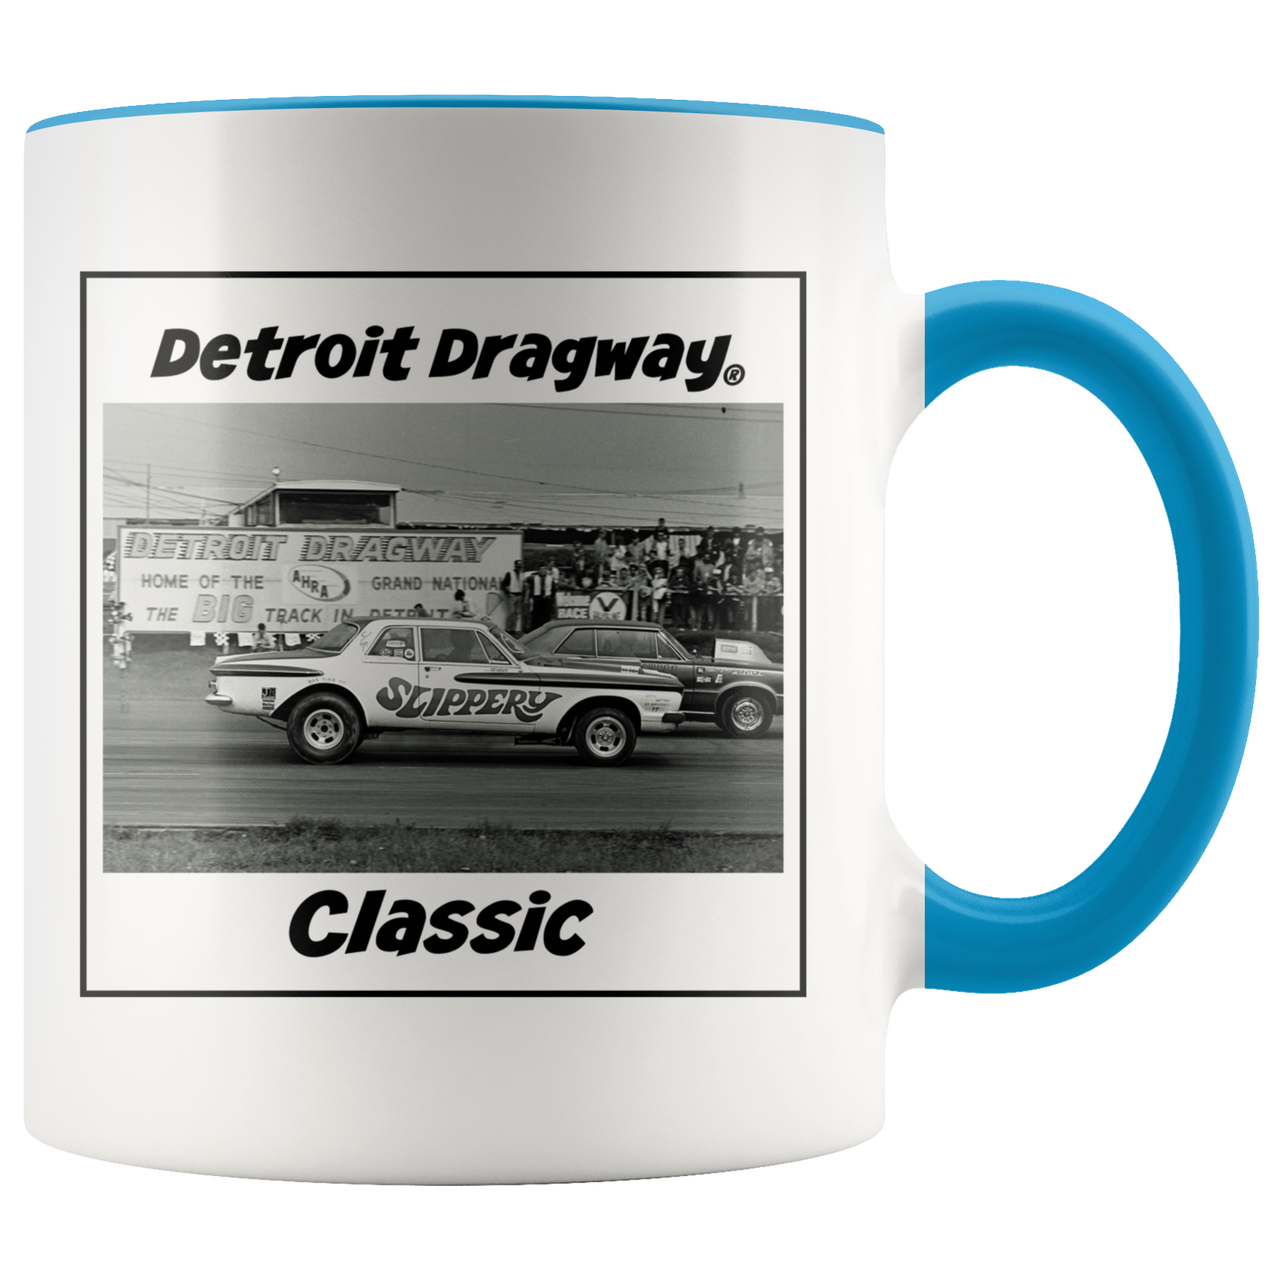 A Detroit Dragway® Slippery Racing At DD